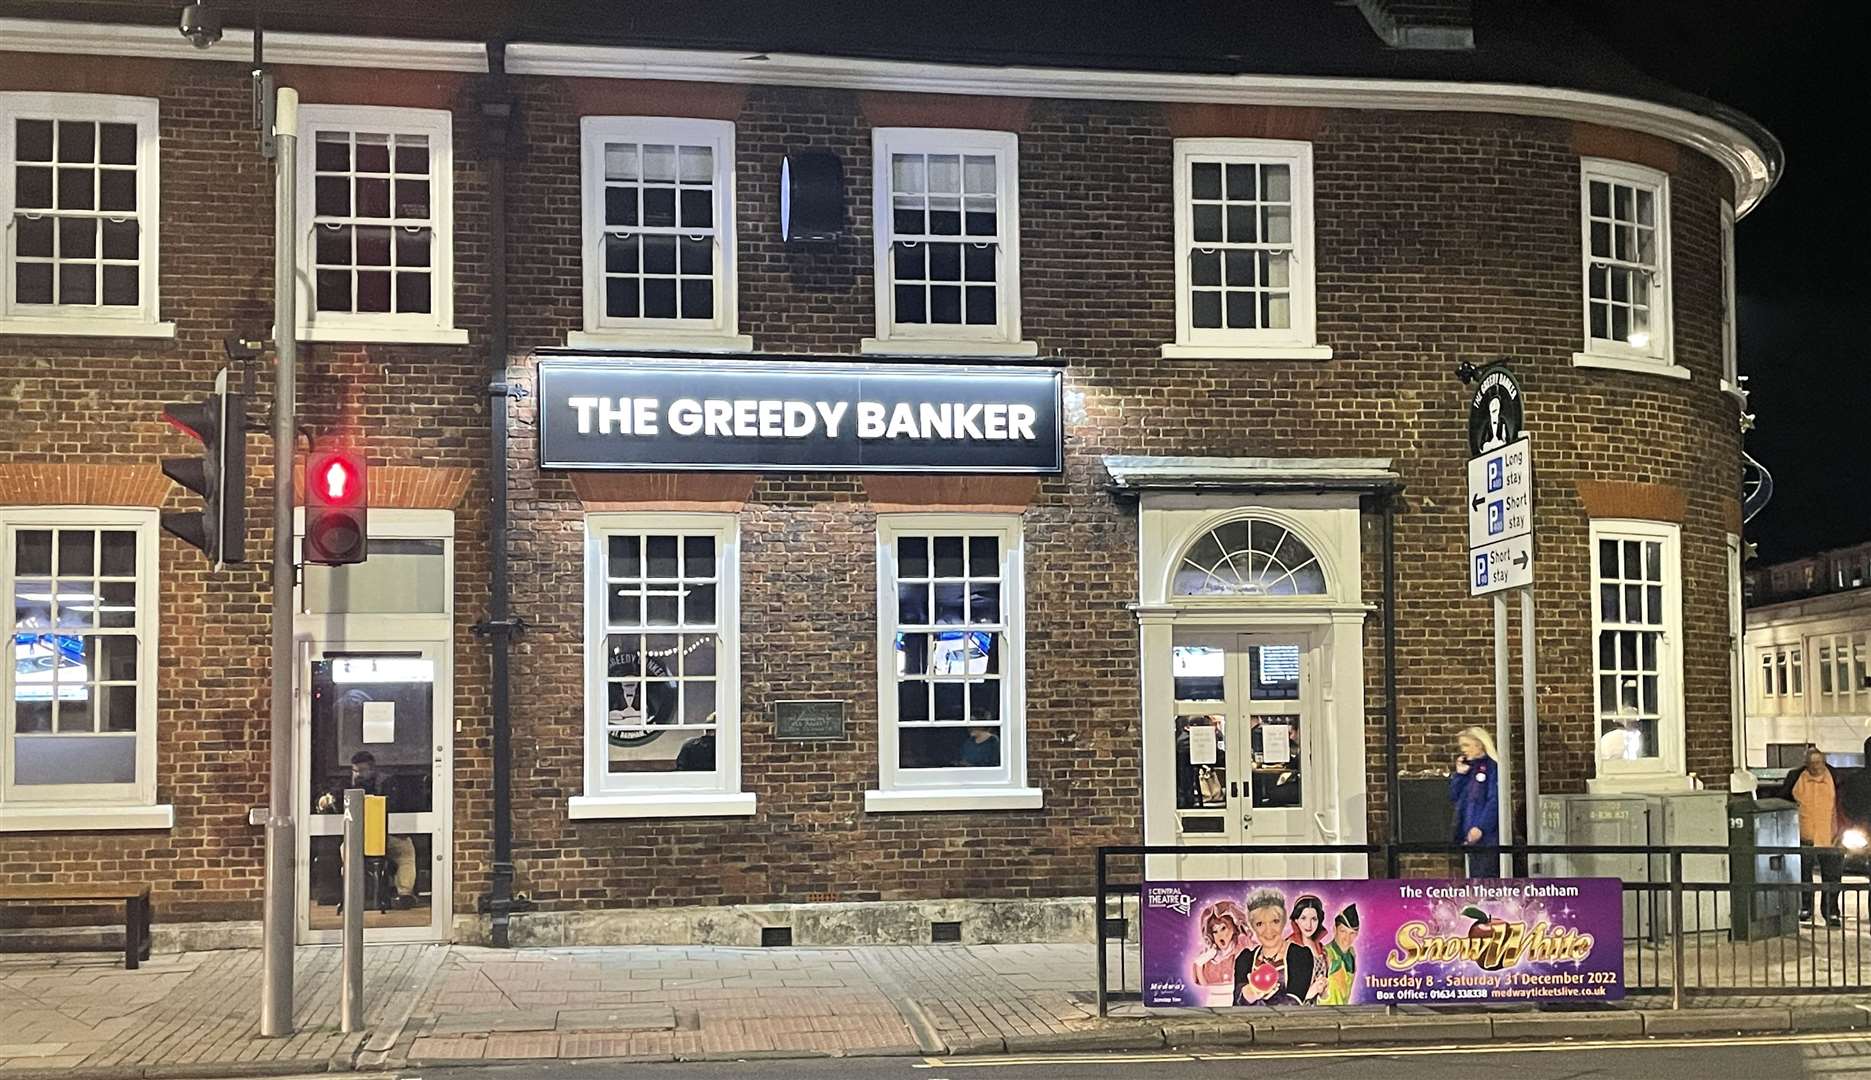 The Greedy Banker in Rainham High Street